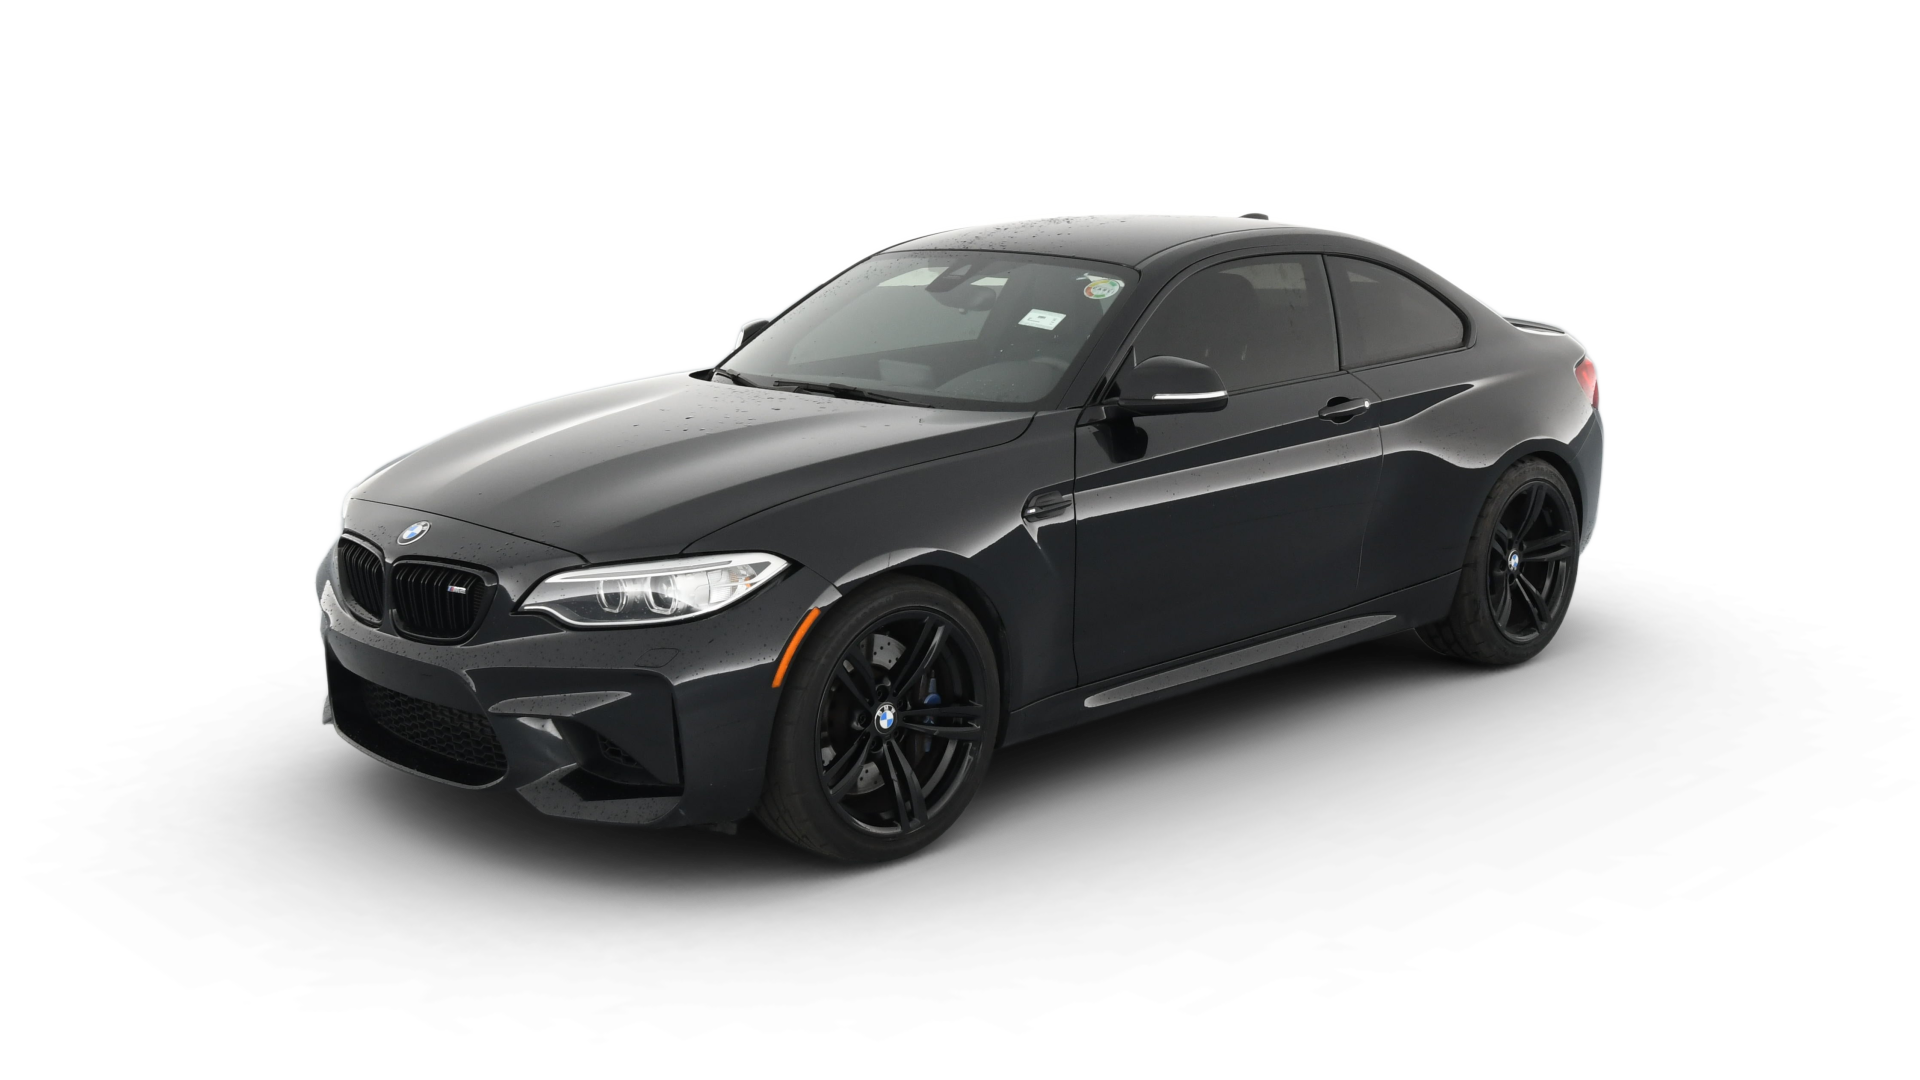 BMW M2 model image.